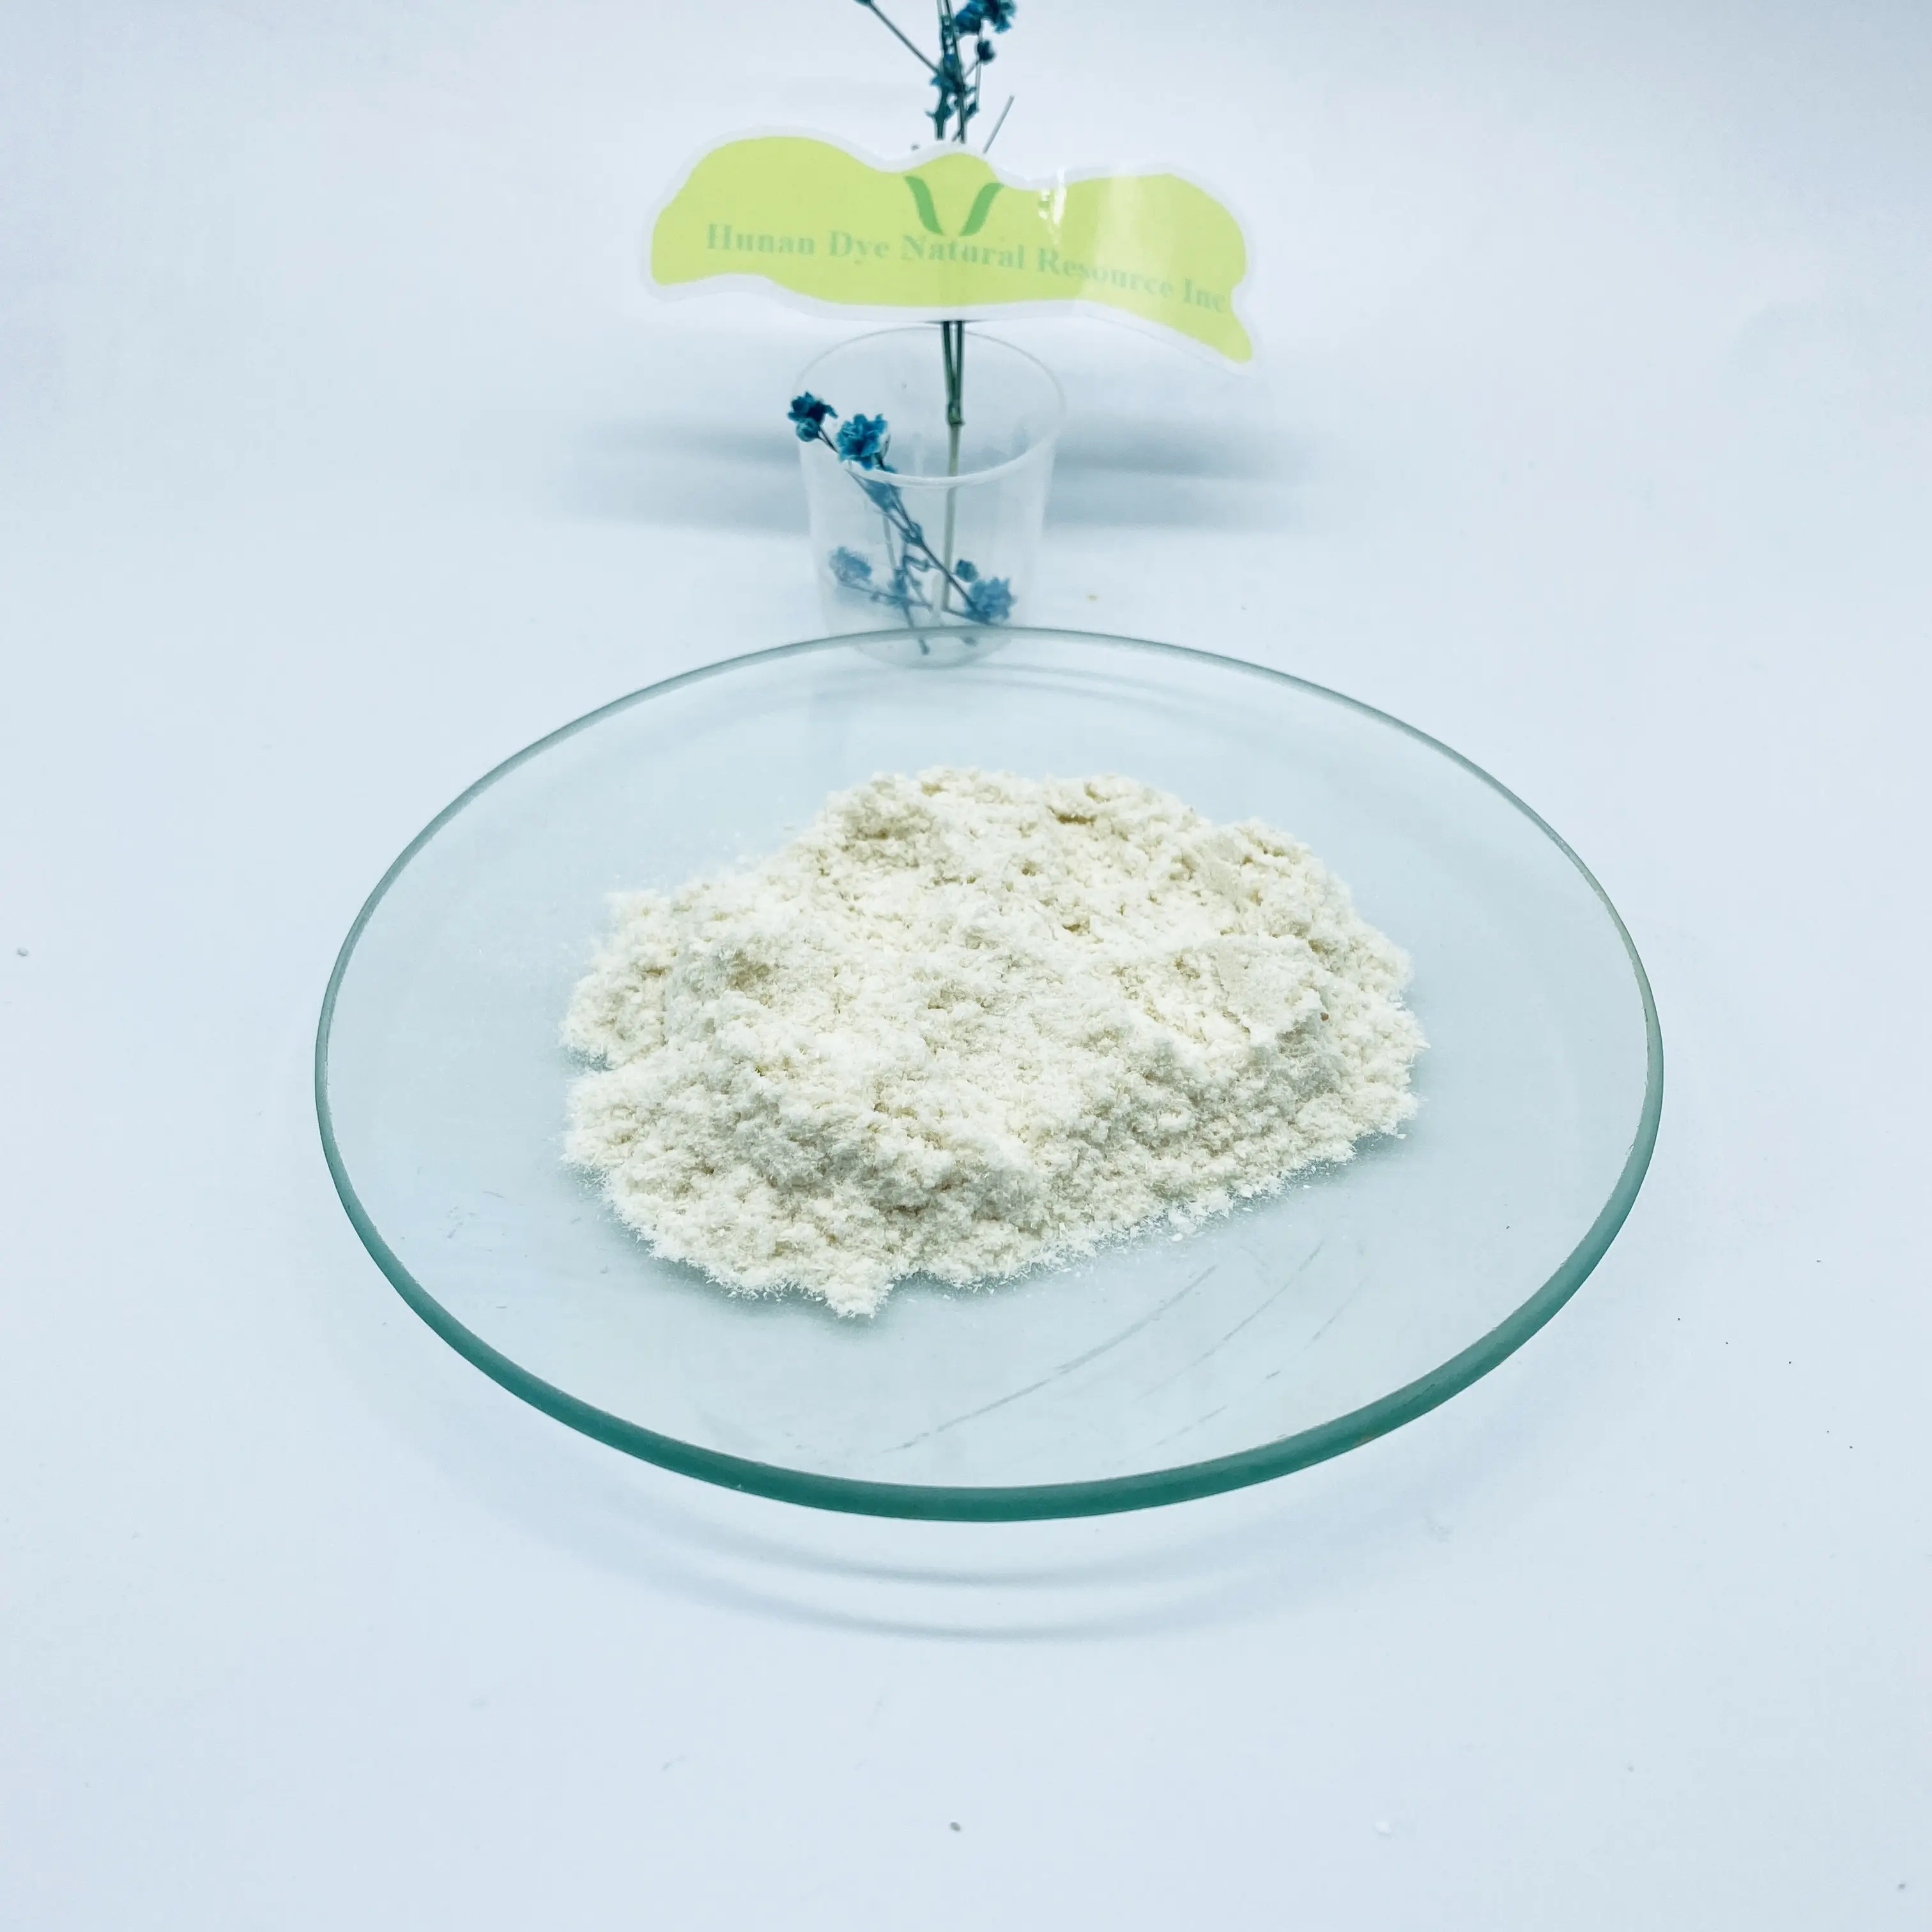 Biologisch abbaubares Material Plla Polymer Absorbier bare Poly-l-Milchsäure